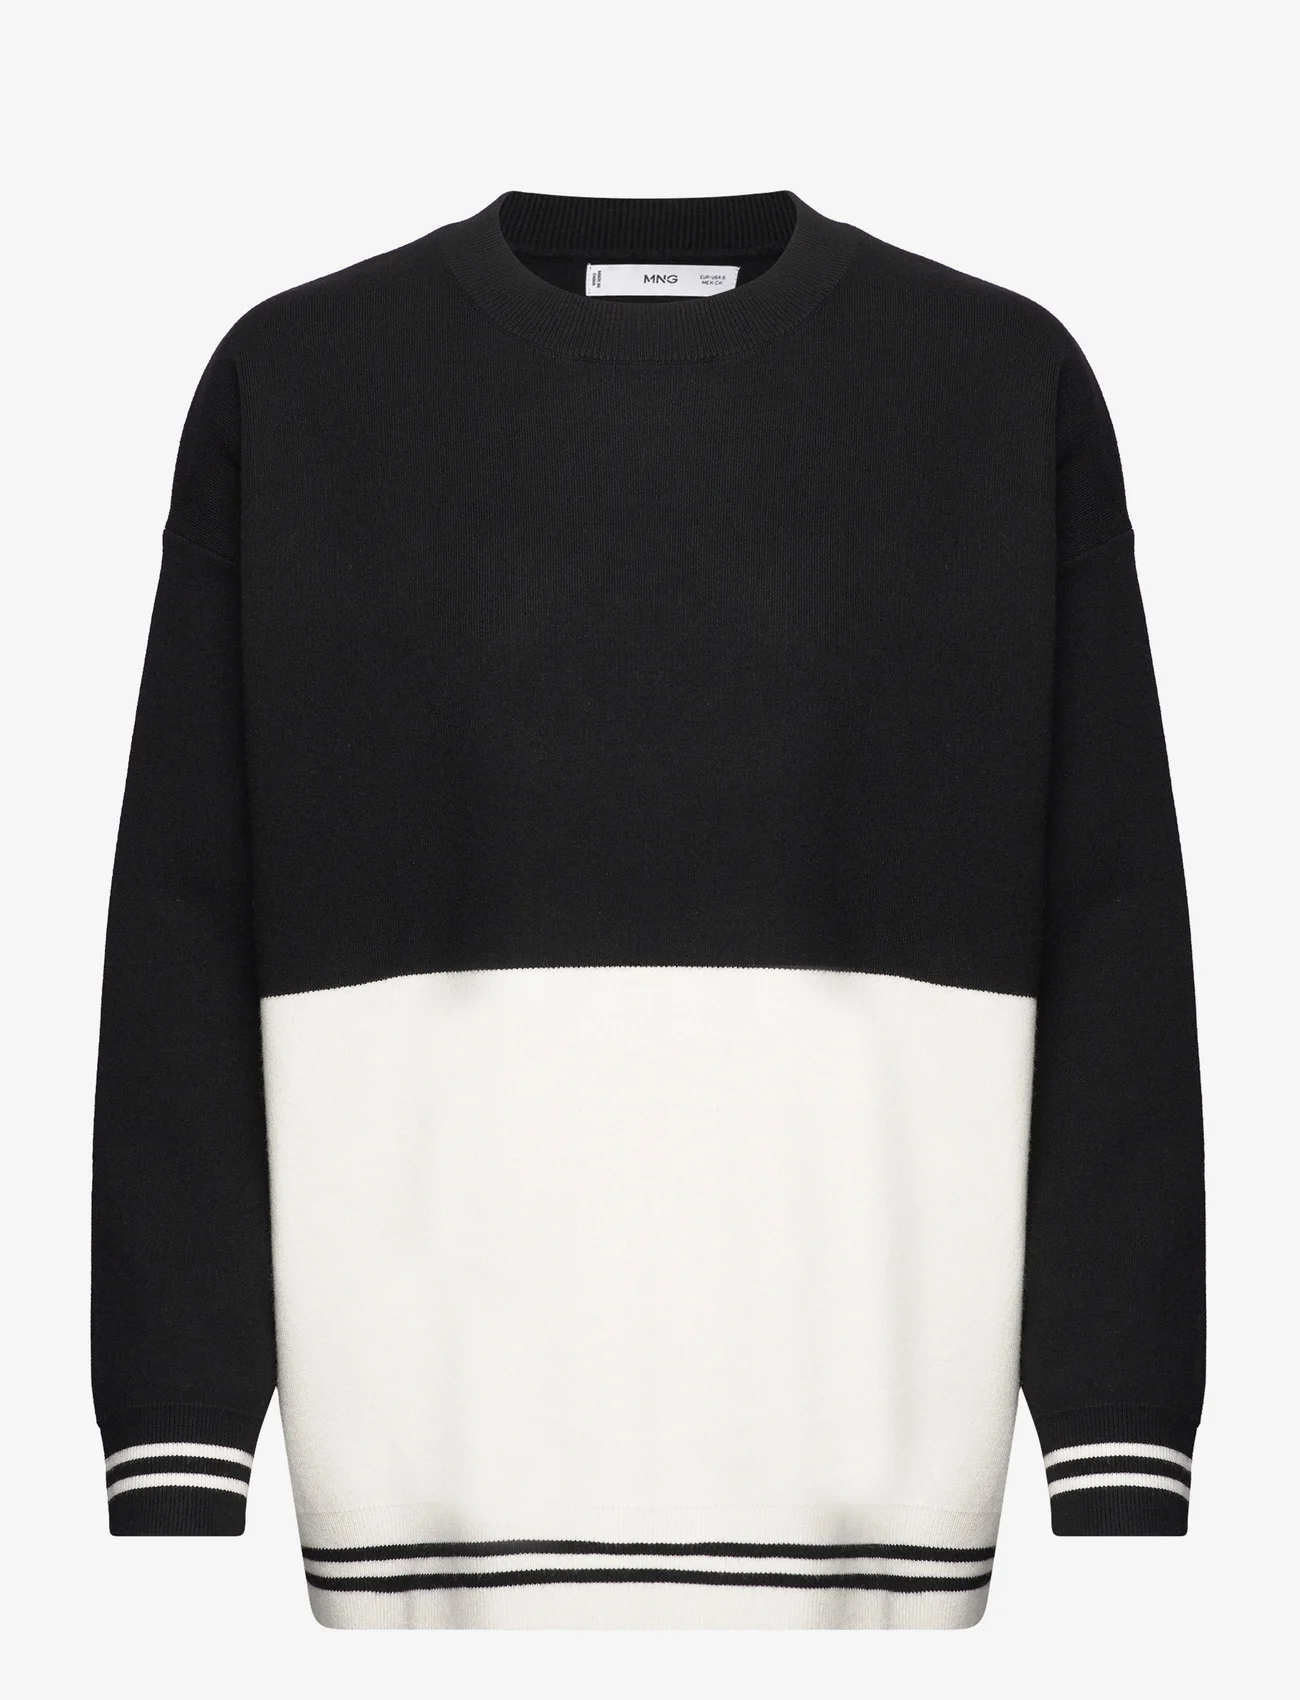 Mango - Bicolour knit sweater - sweatshirts - black - 1